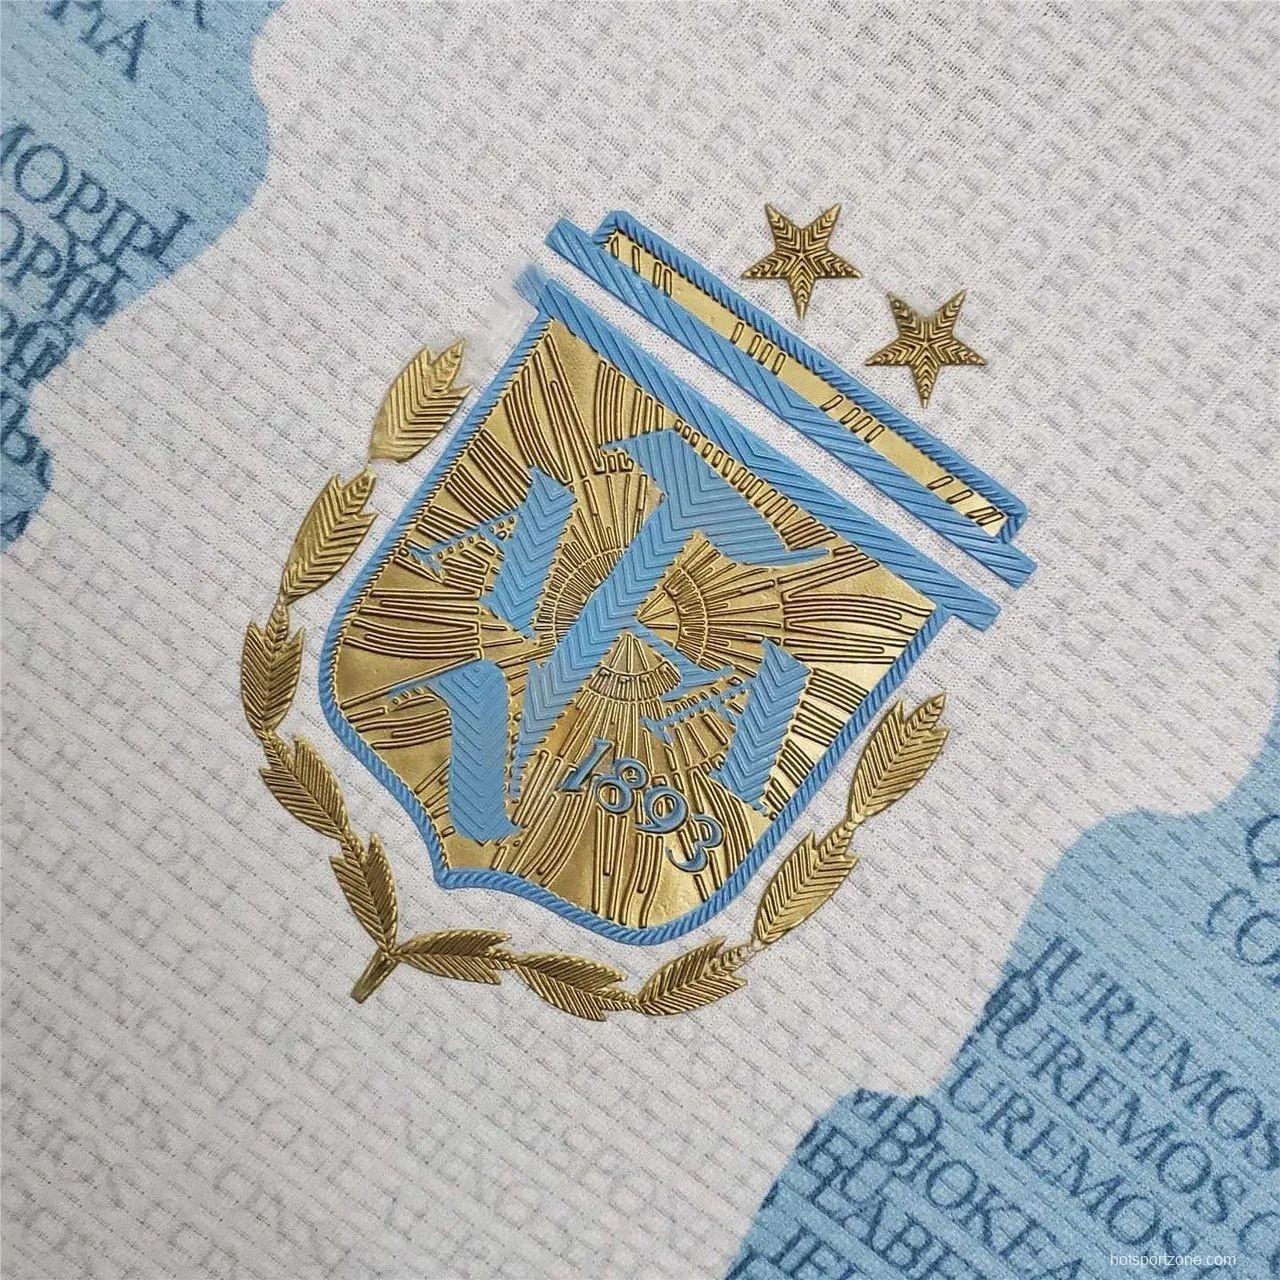 Retro 2021 Argentina Home Maradona Commemorative Edition Jersey